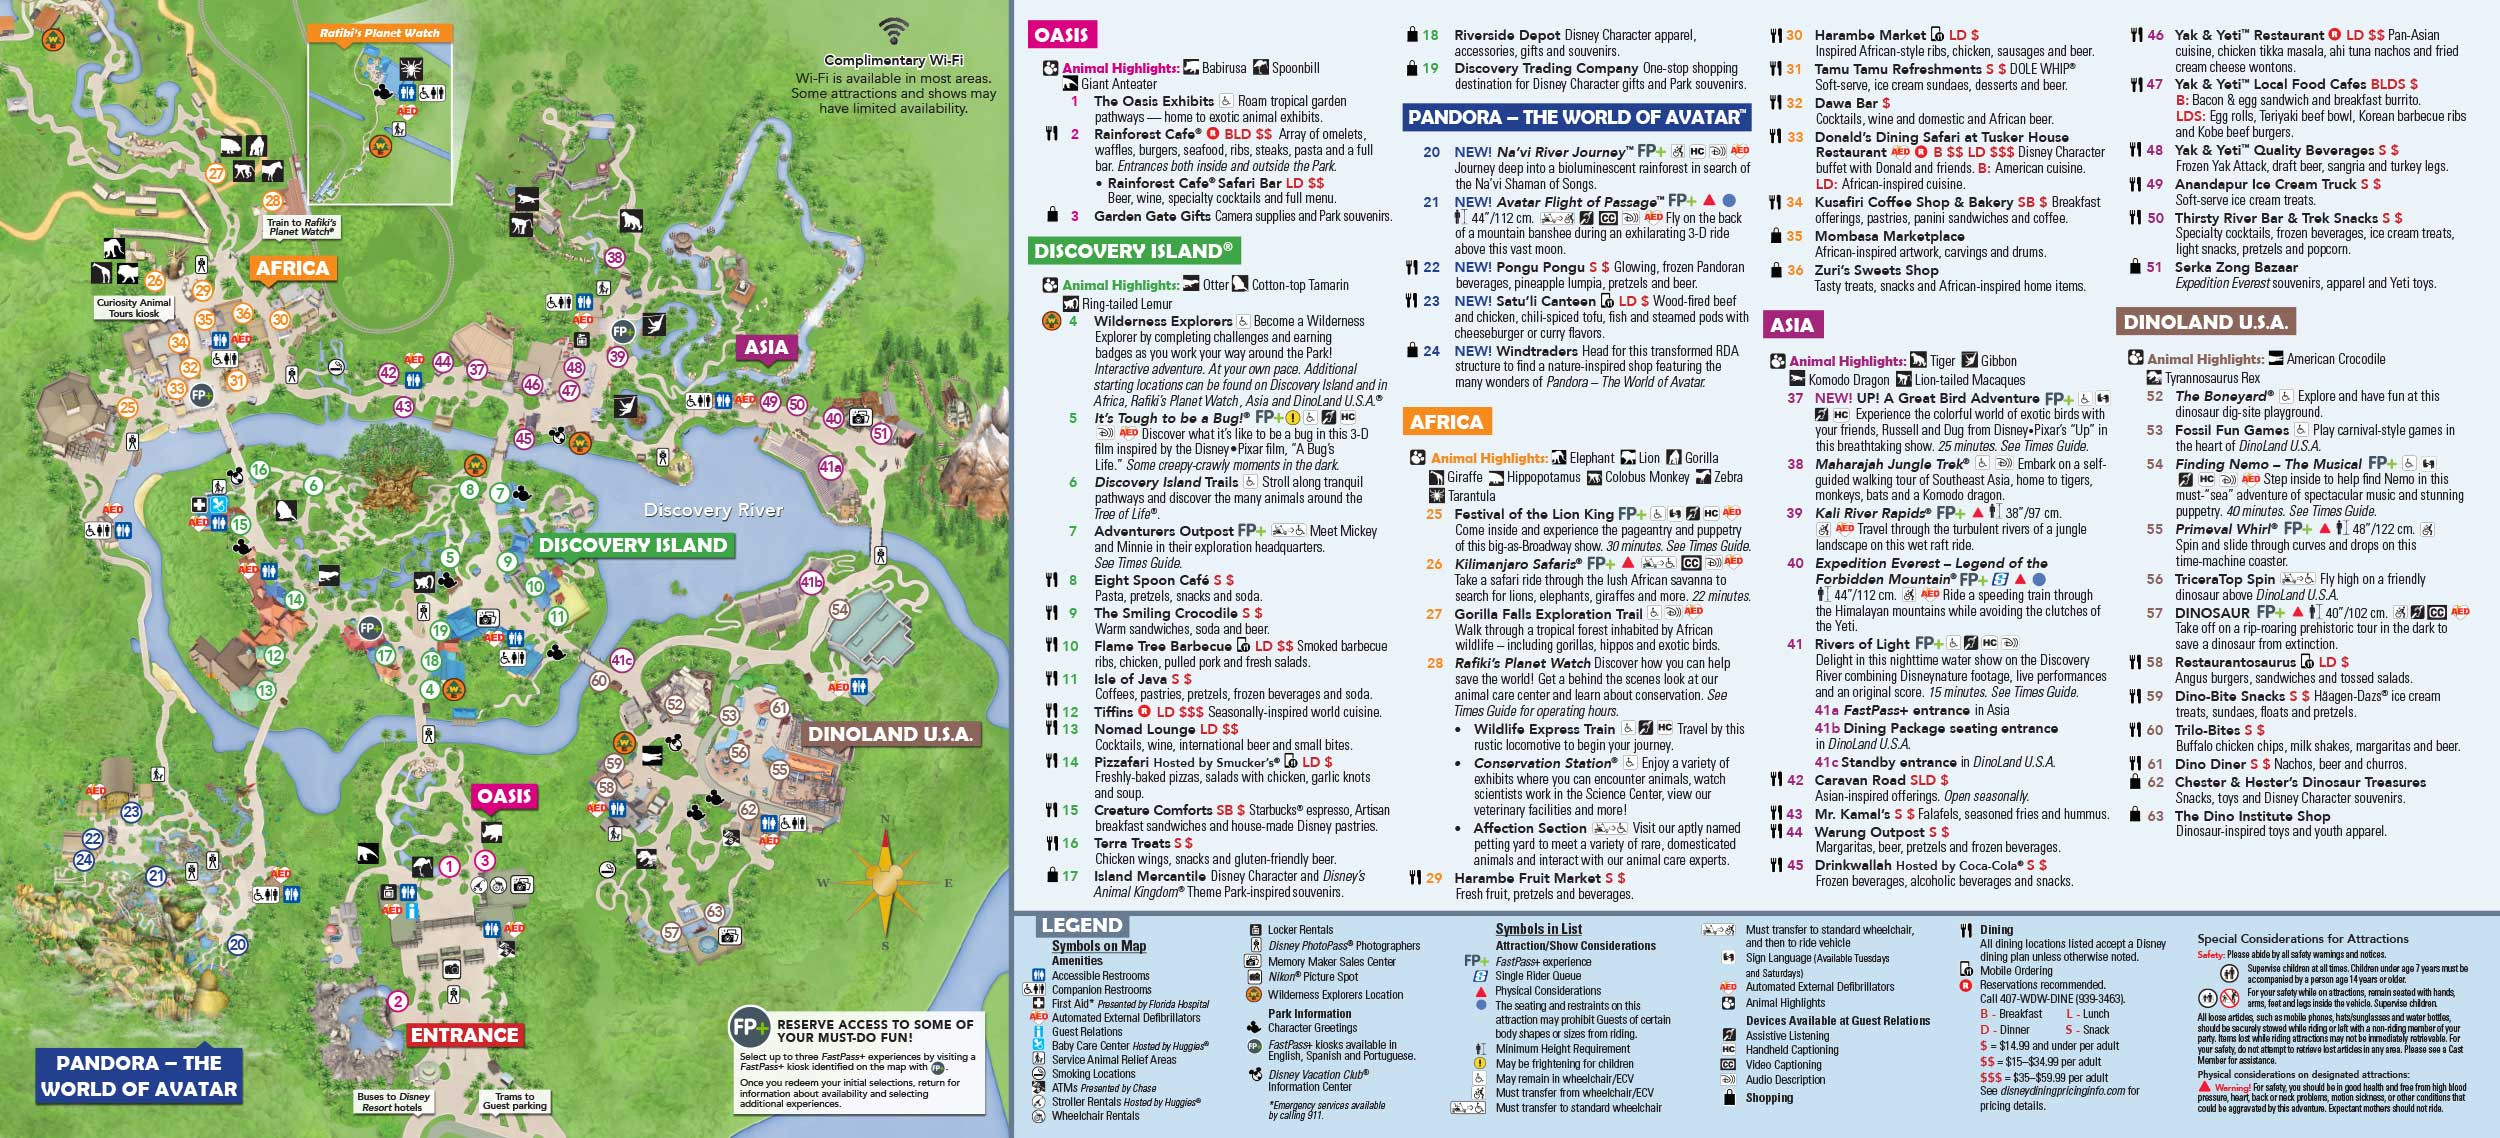 Printable Disneyland Map 2017 Awesome Disney S Animal Kingdom Map Theme Park Map